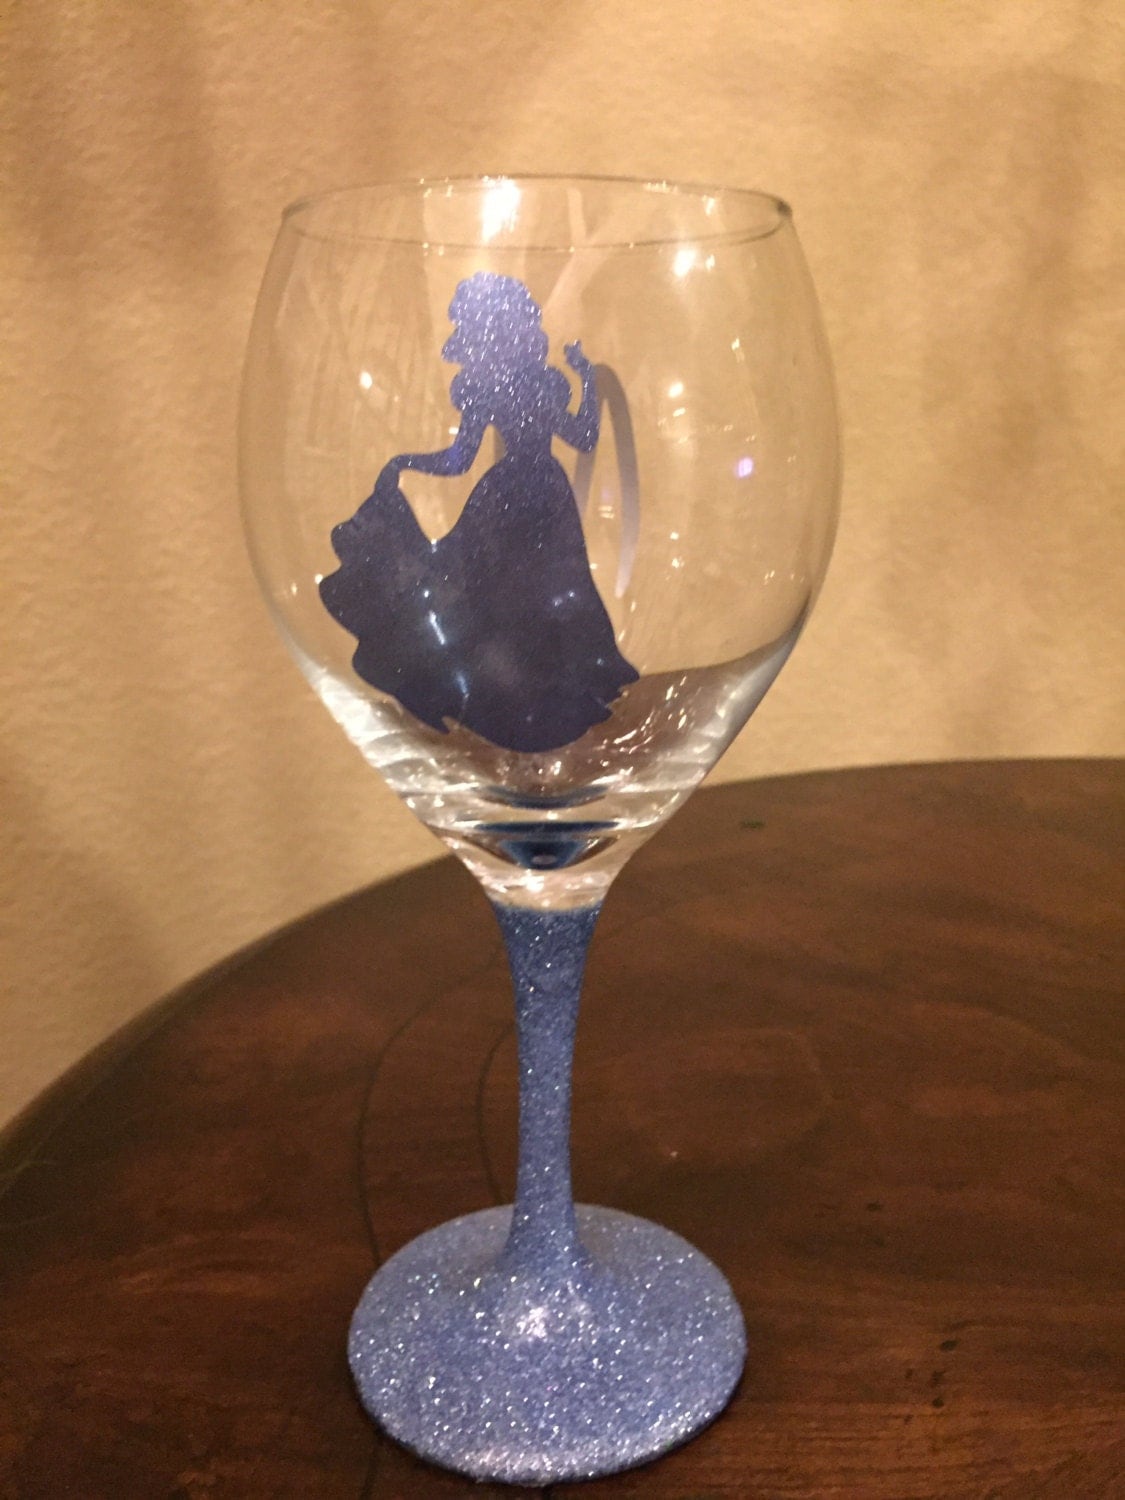 Aurora Disney Princess Wine Glasses with a Glittered Stem